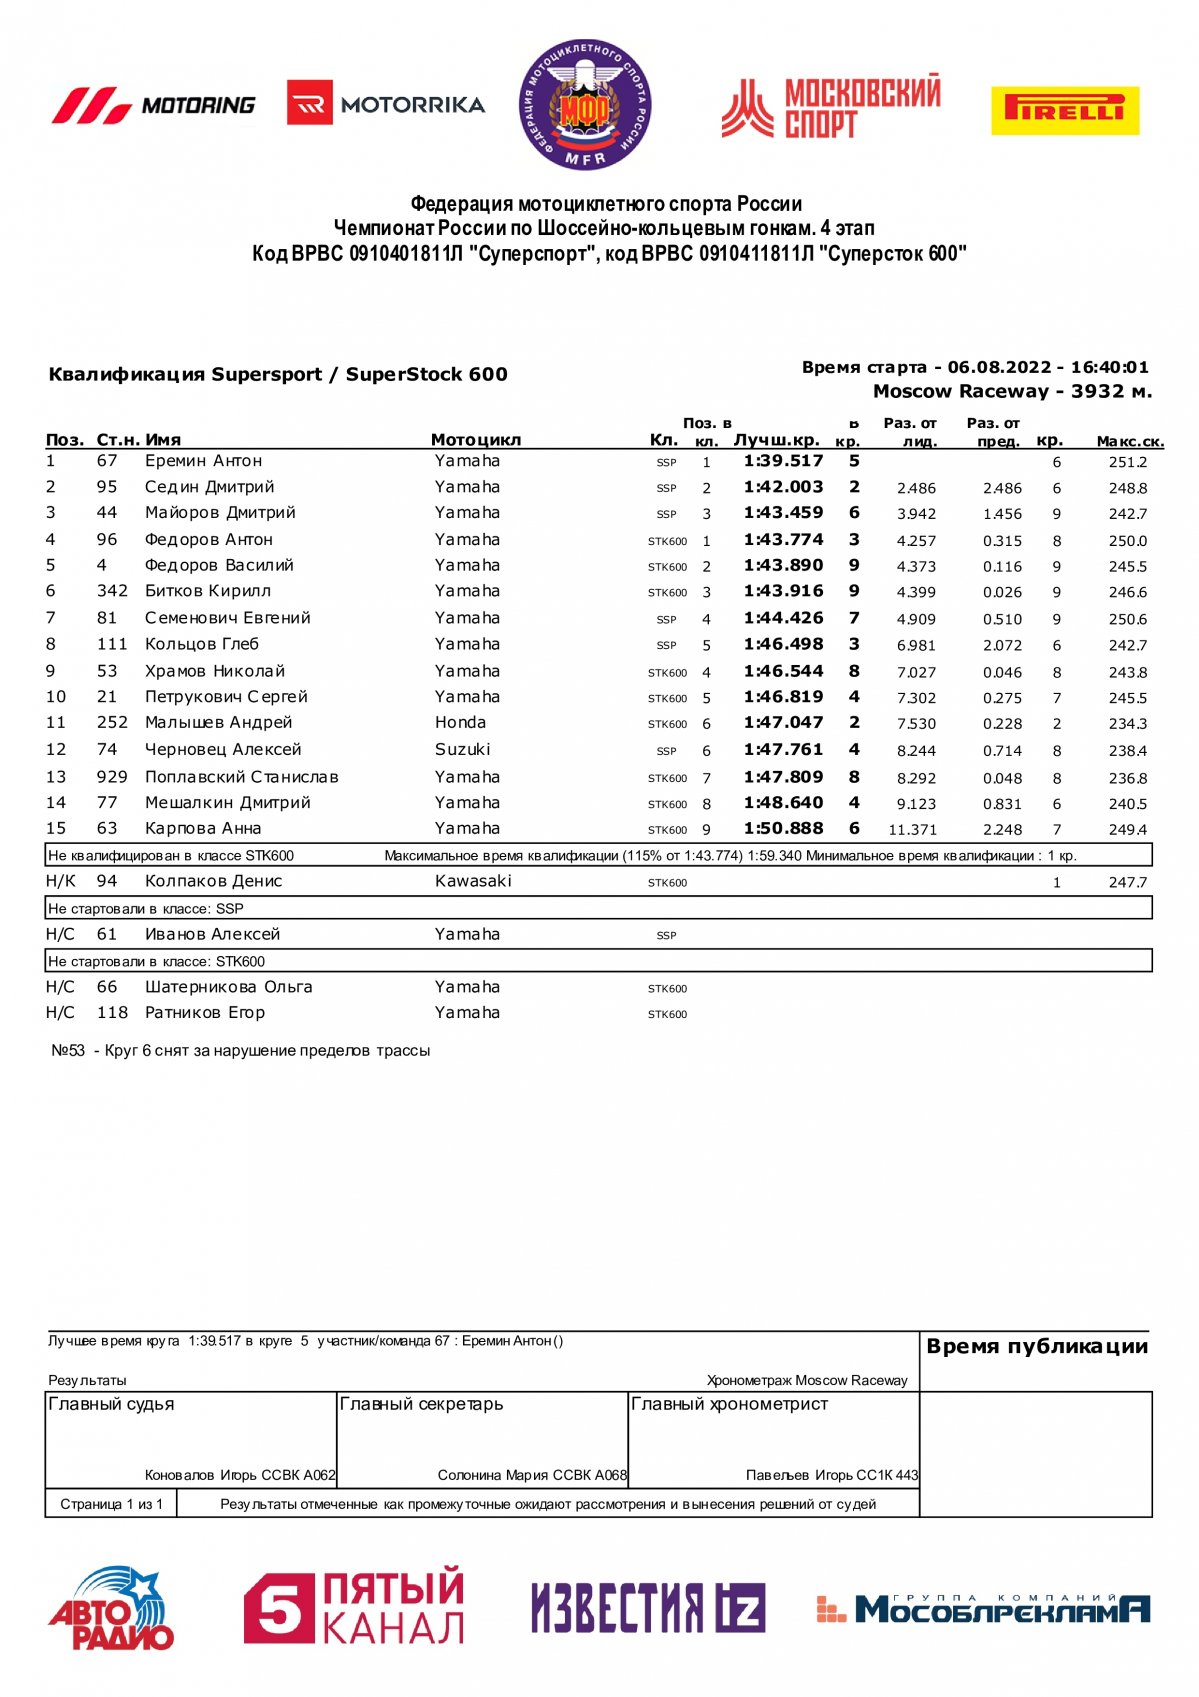 Результаты квалификации 4 этапа ШКМГ - Supesport/STK-600, Moscow Raceway (6/08/2022)